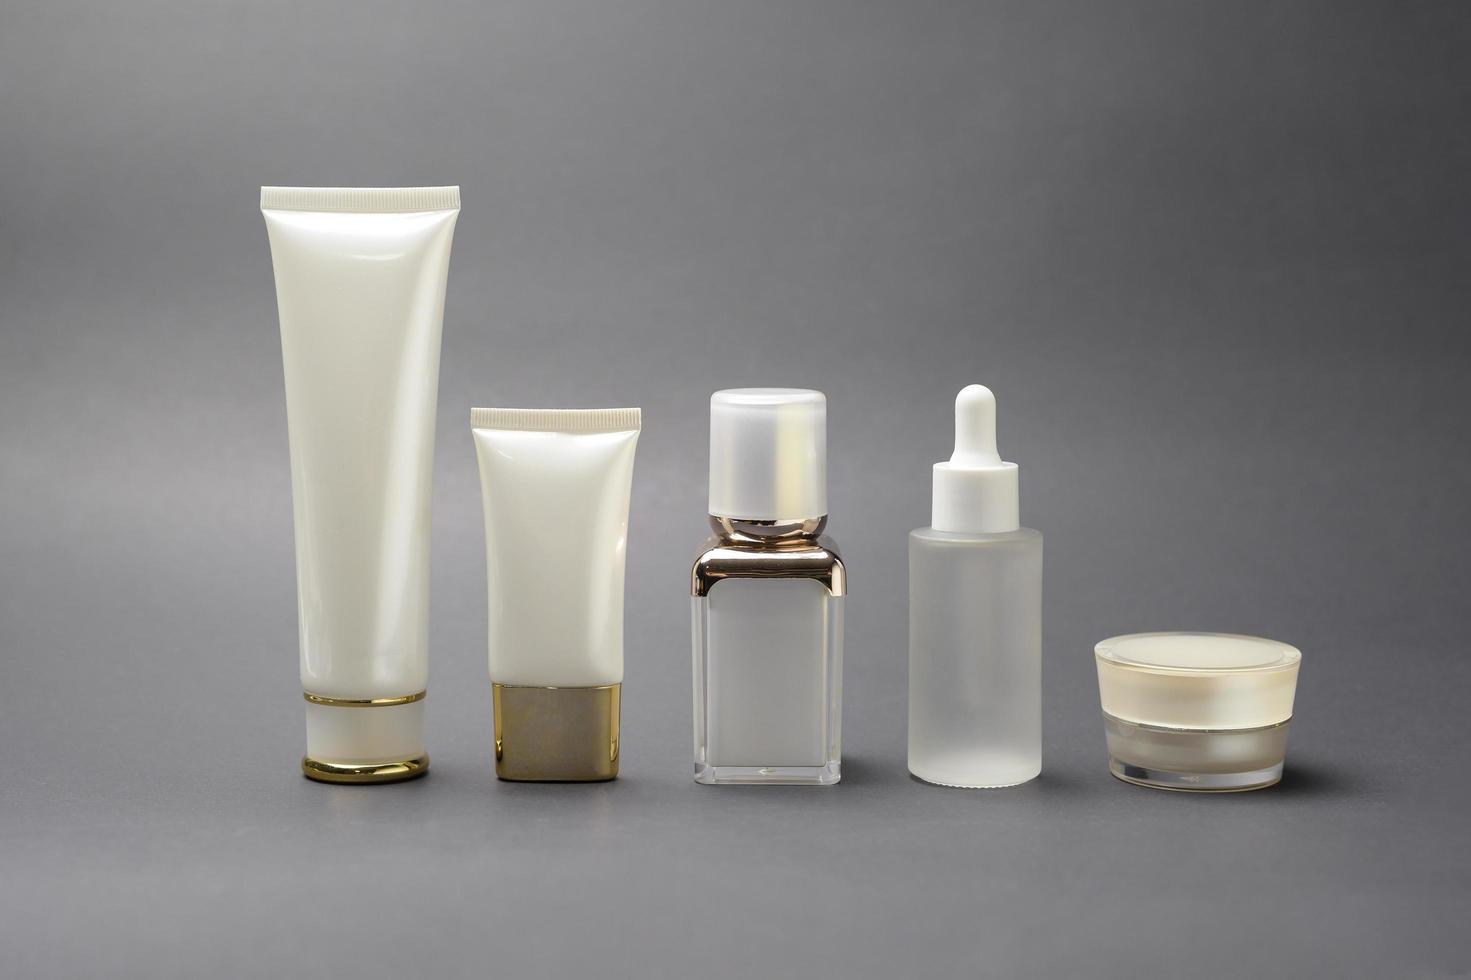 moisturizing cream bottle over black background studio, packing and skincare beauty concept photo